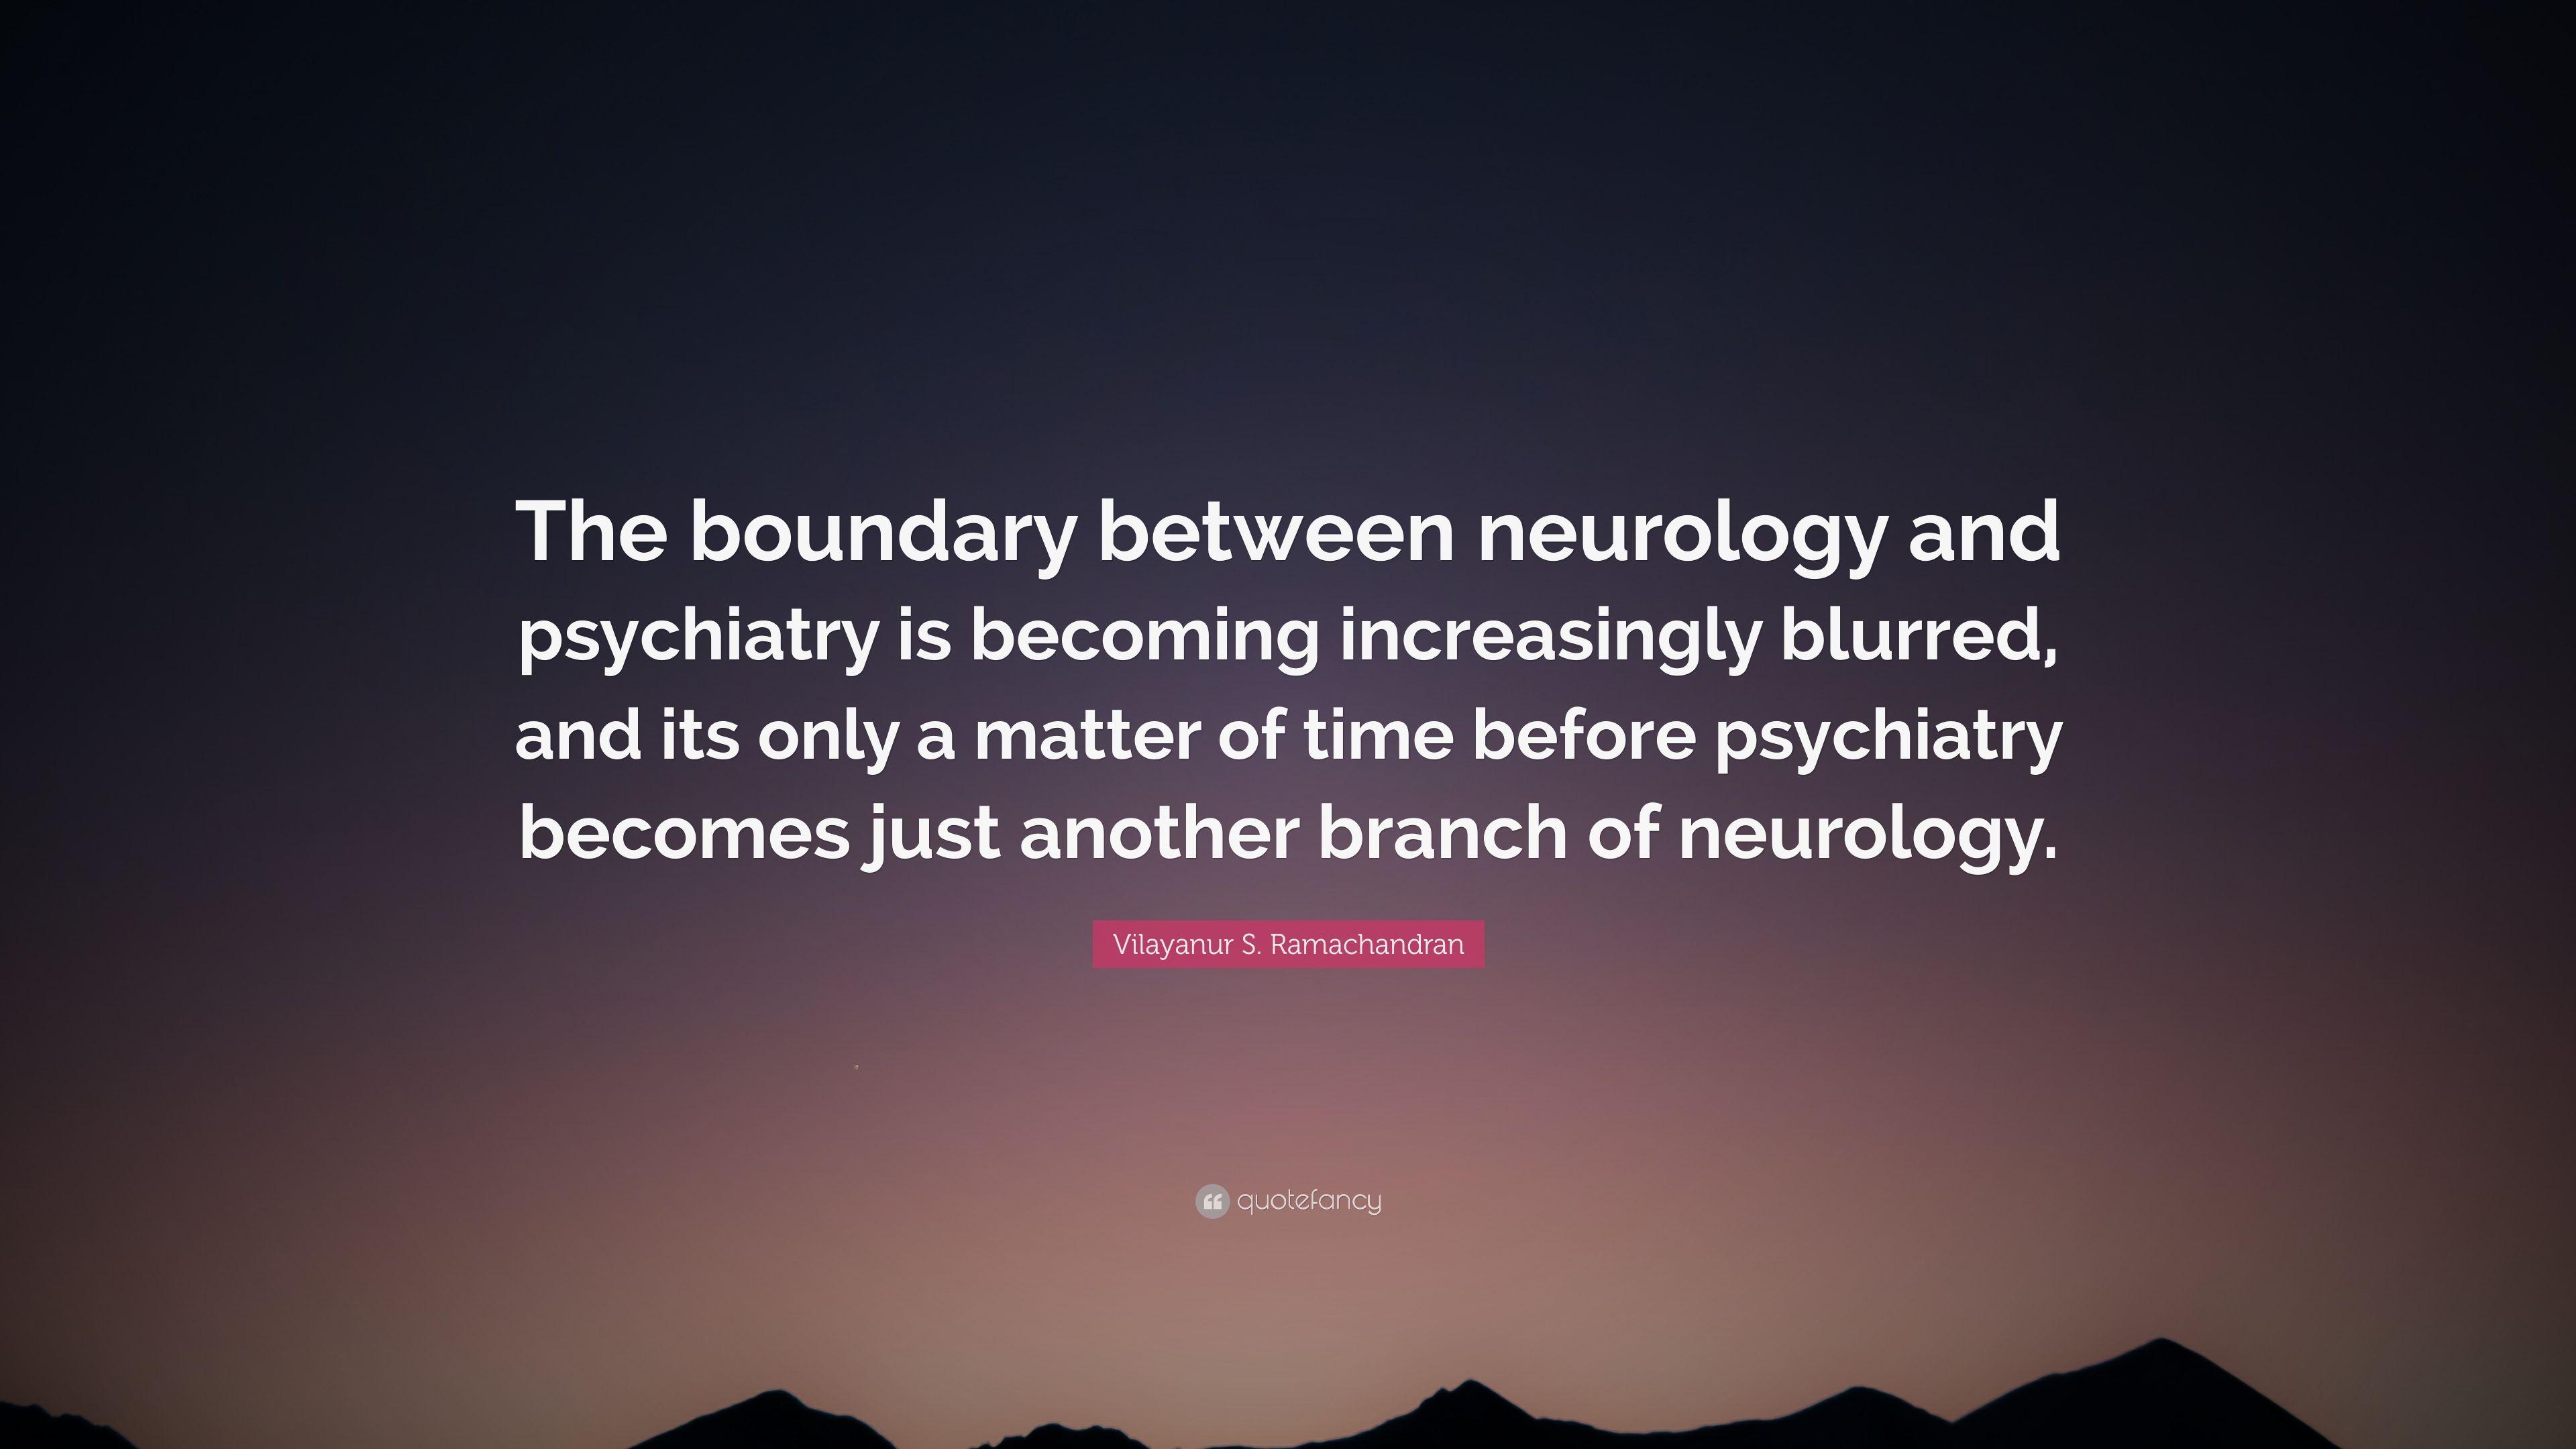 Vilayanur S. Ramachandran Quote: “The boundary between neurology